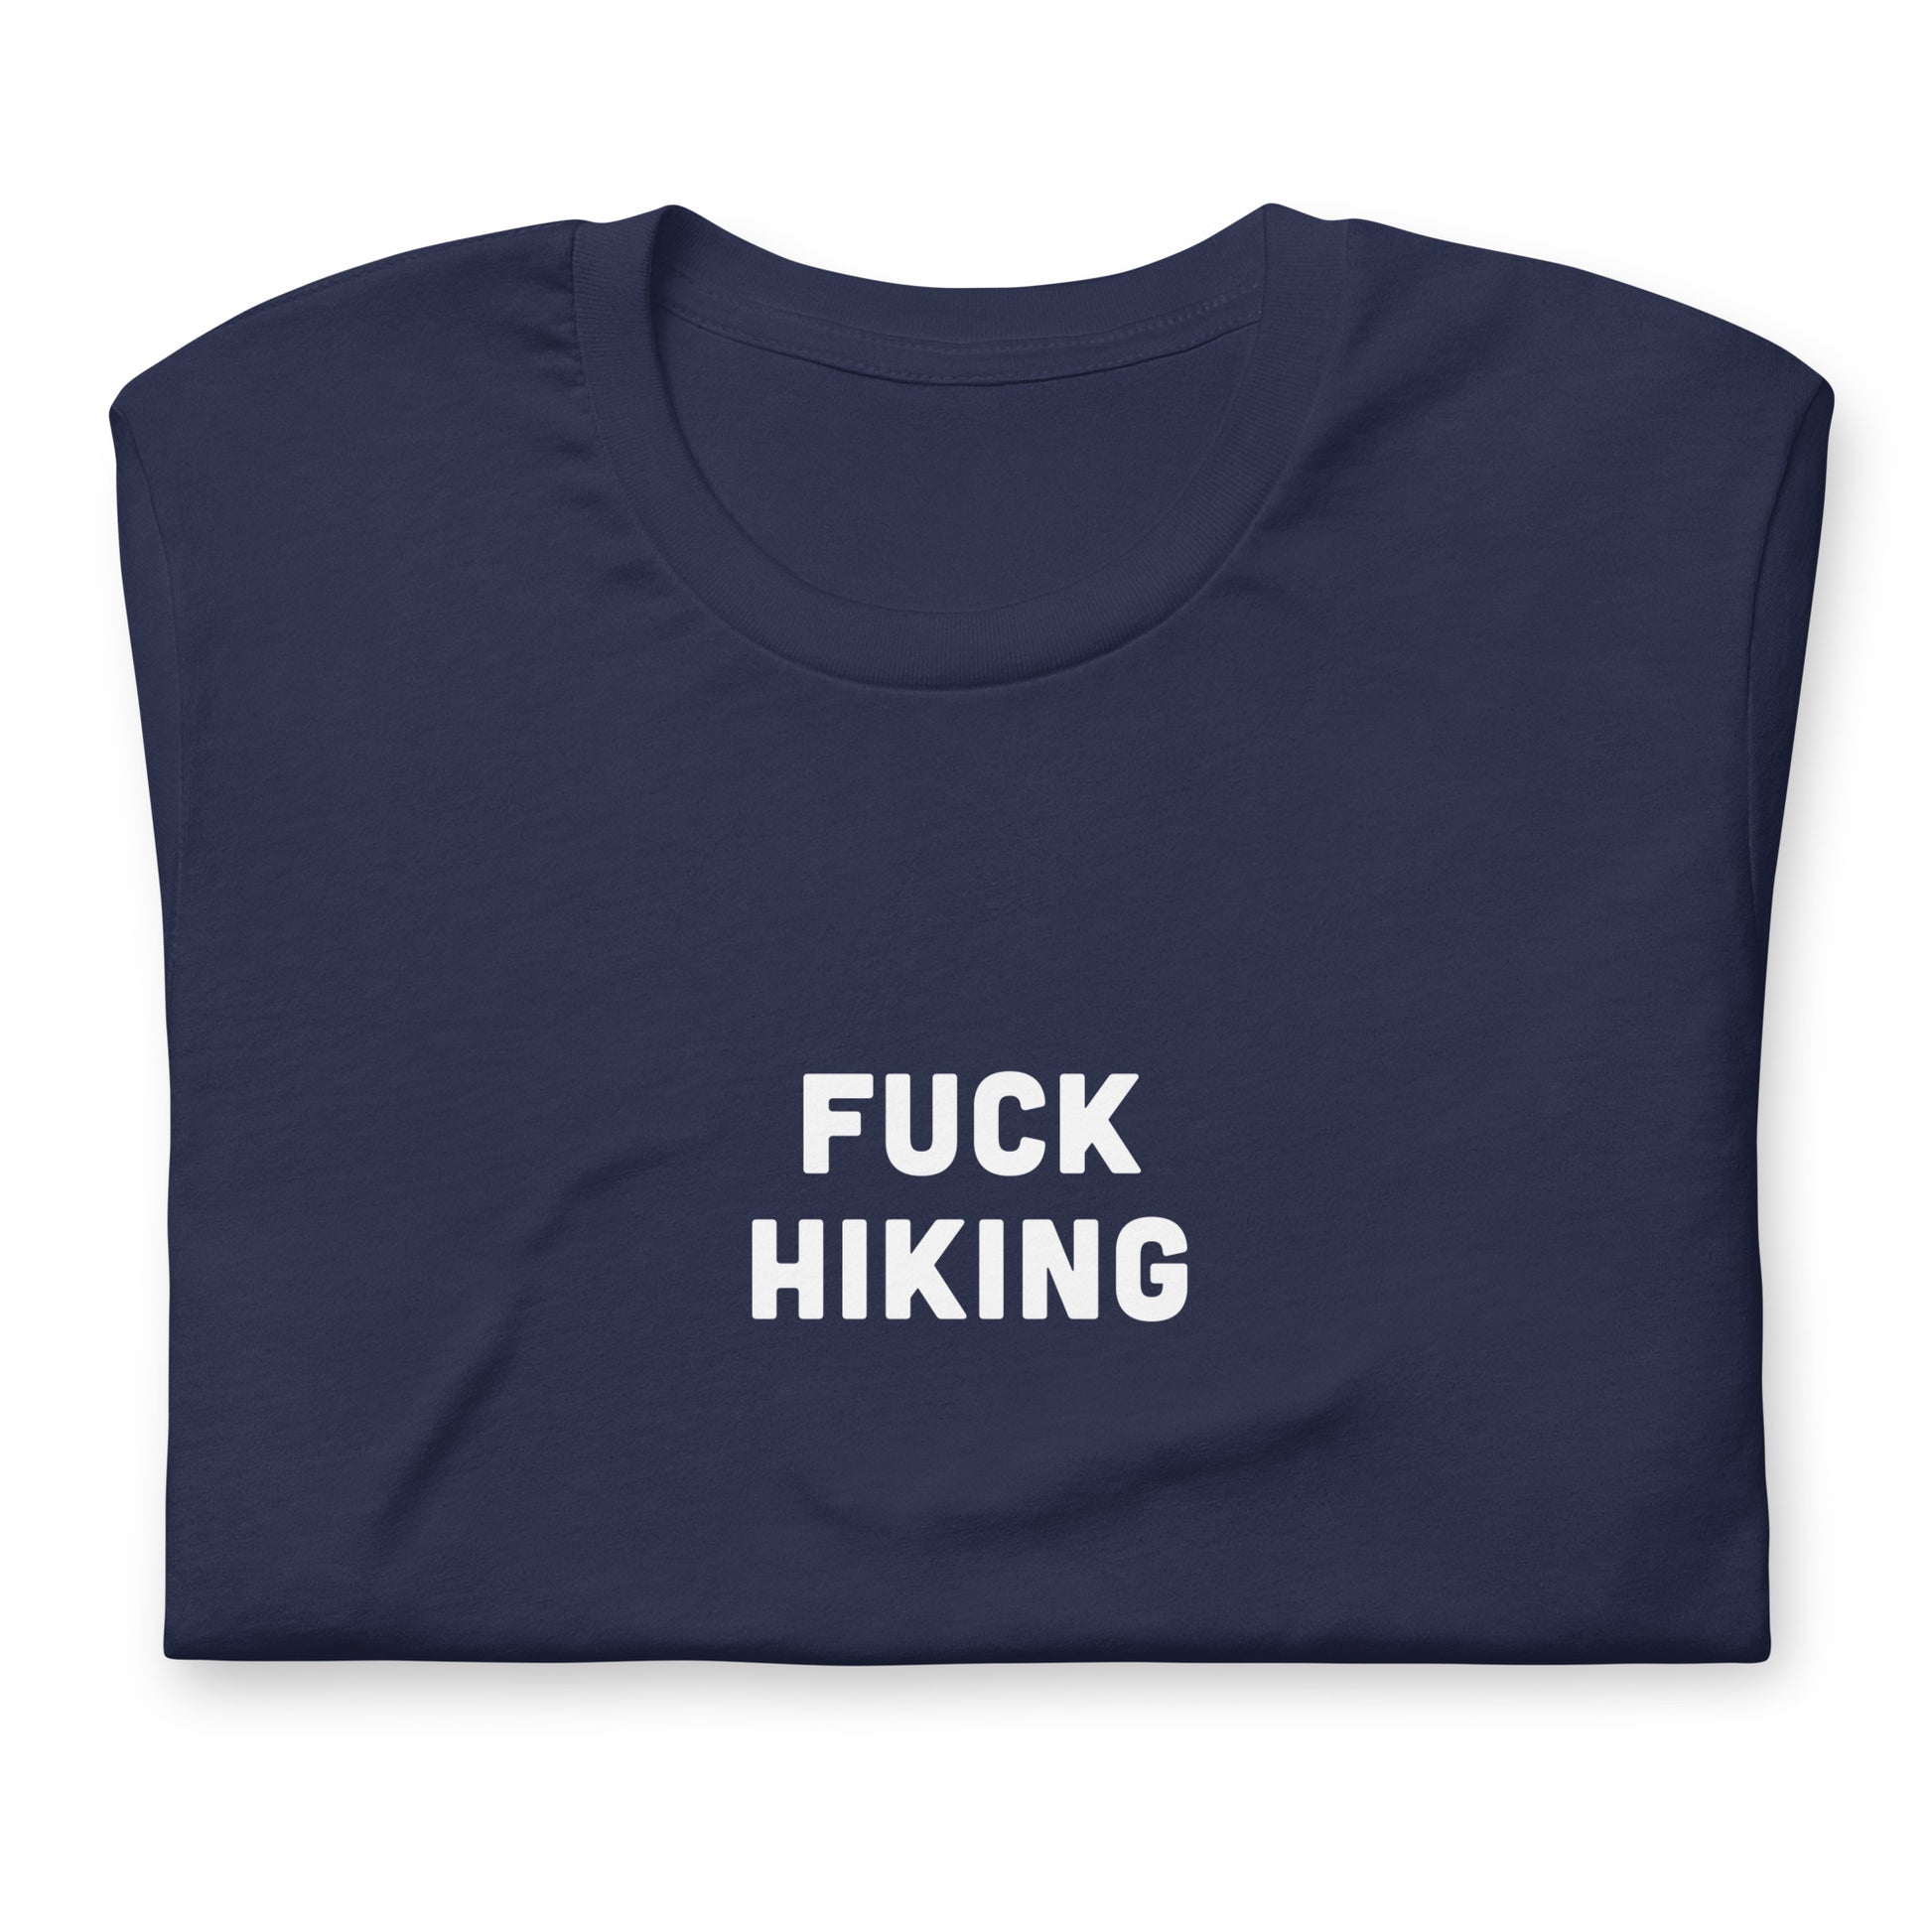 Fuck Hiking T-Shirt Size L Color Black